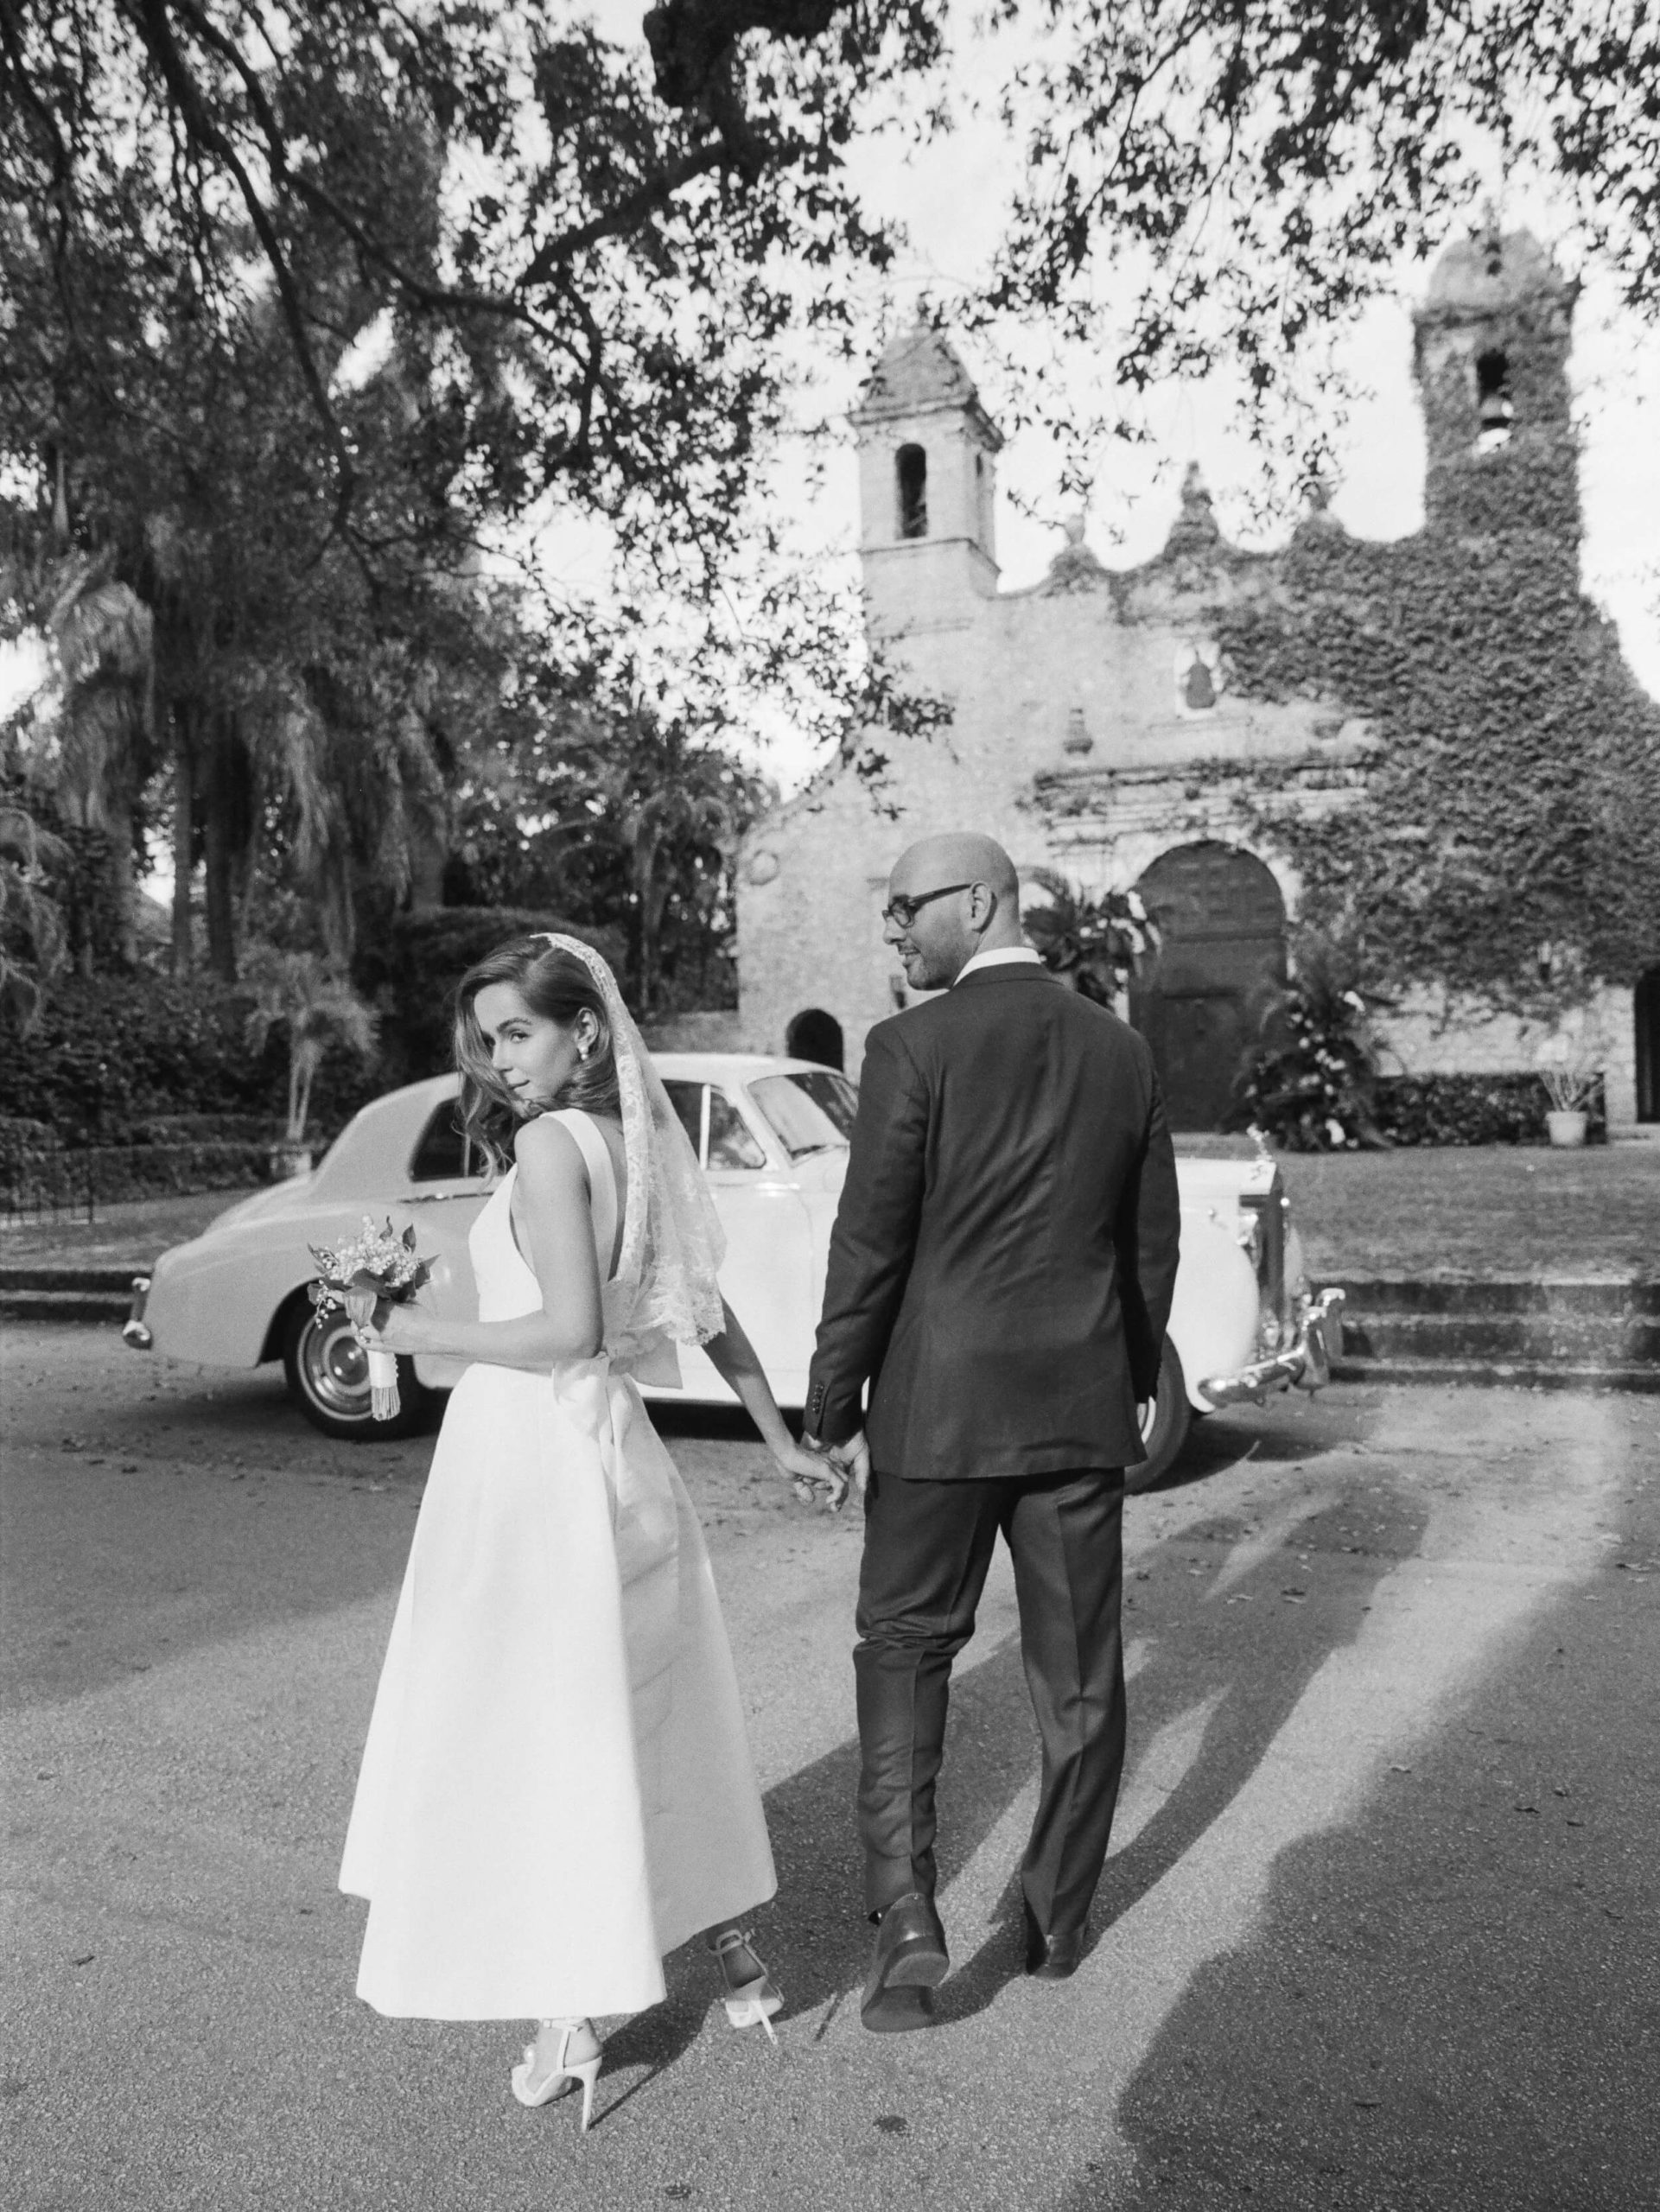 Stephanie and Pedro after their Miami wedding ceremony.